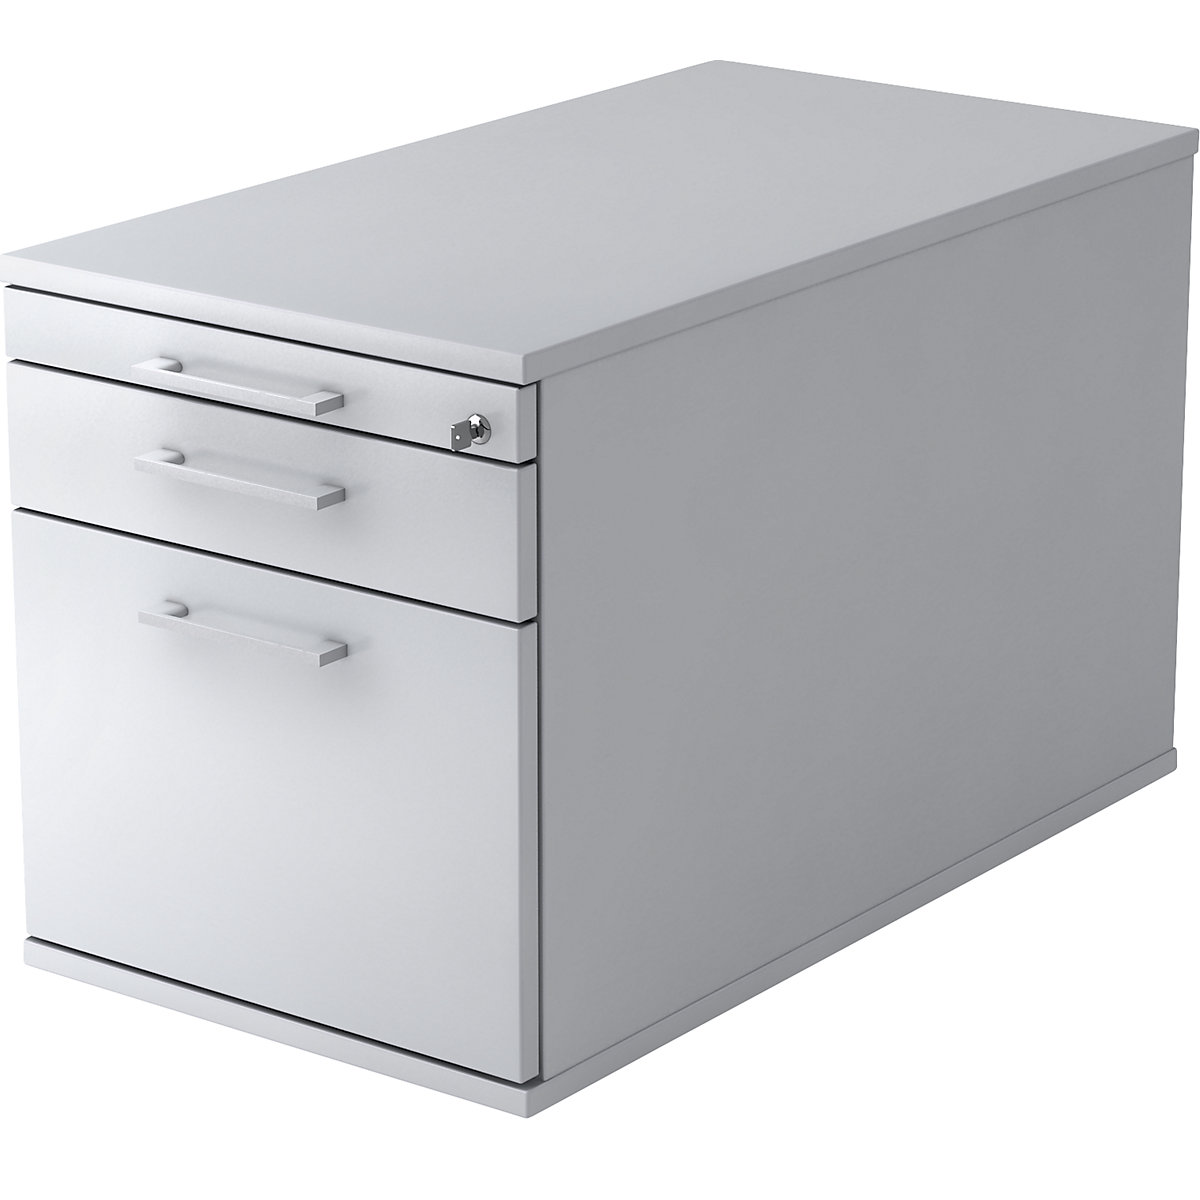 Mobile pedestal – eurokraft pro, 1 utensil drawer, 1 drawer, 1 file suspension drawer, depth 800 mm, light grey-14